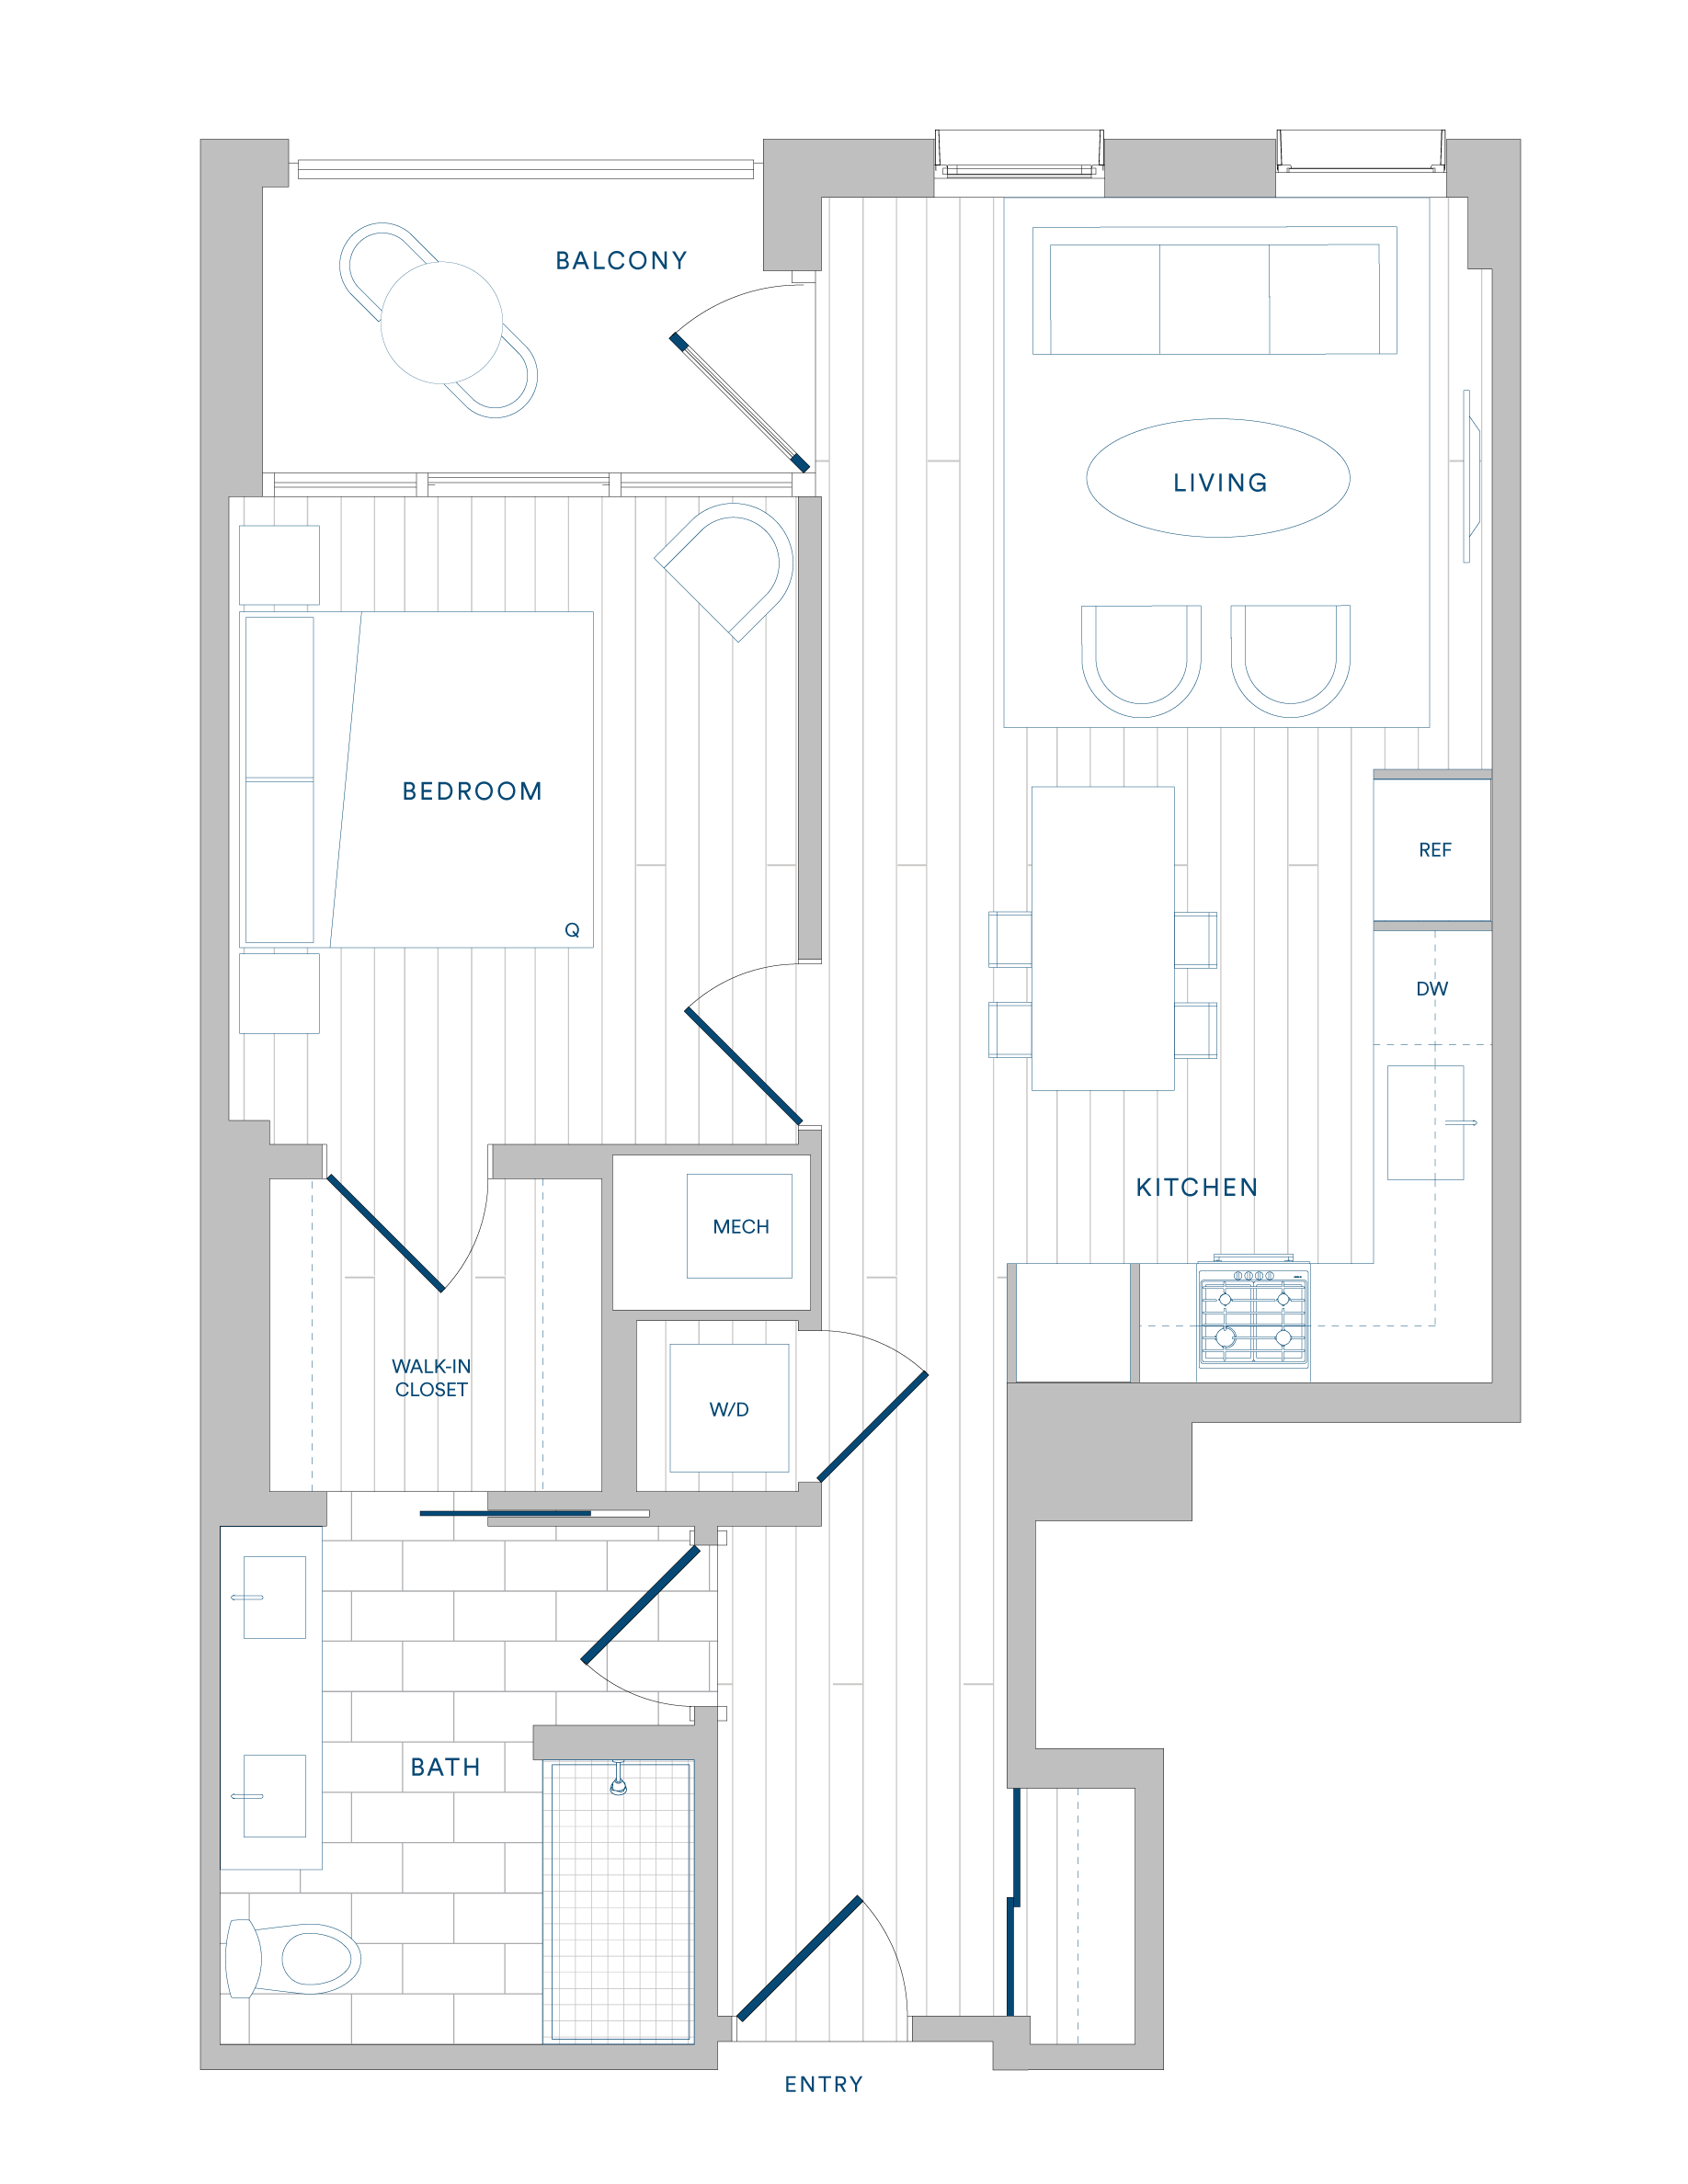 Floorplan for Apartment #809, 1 bedroom unit at Margarite